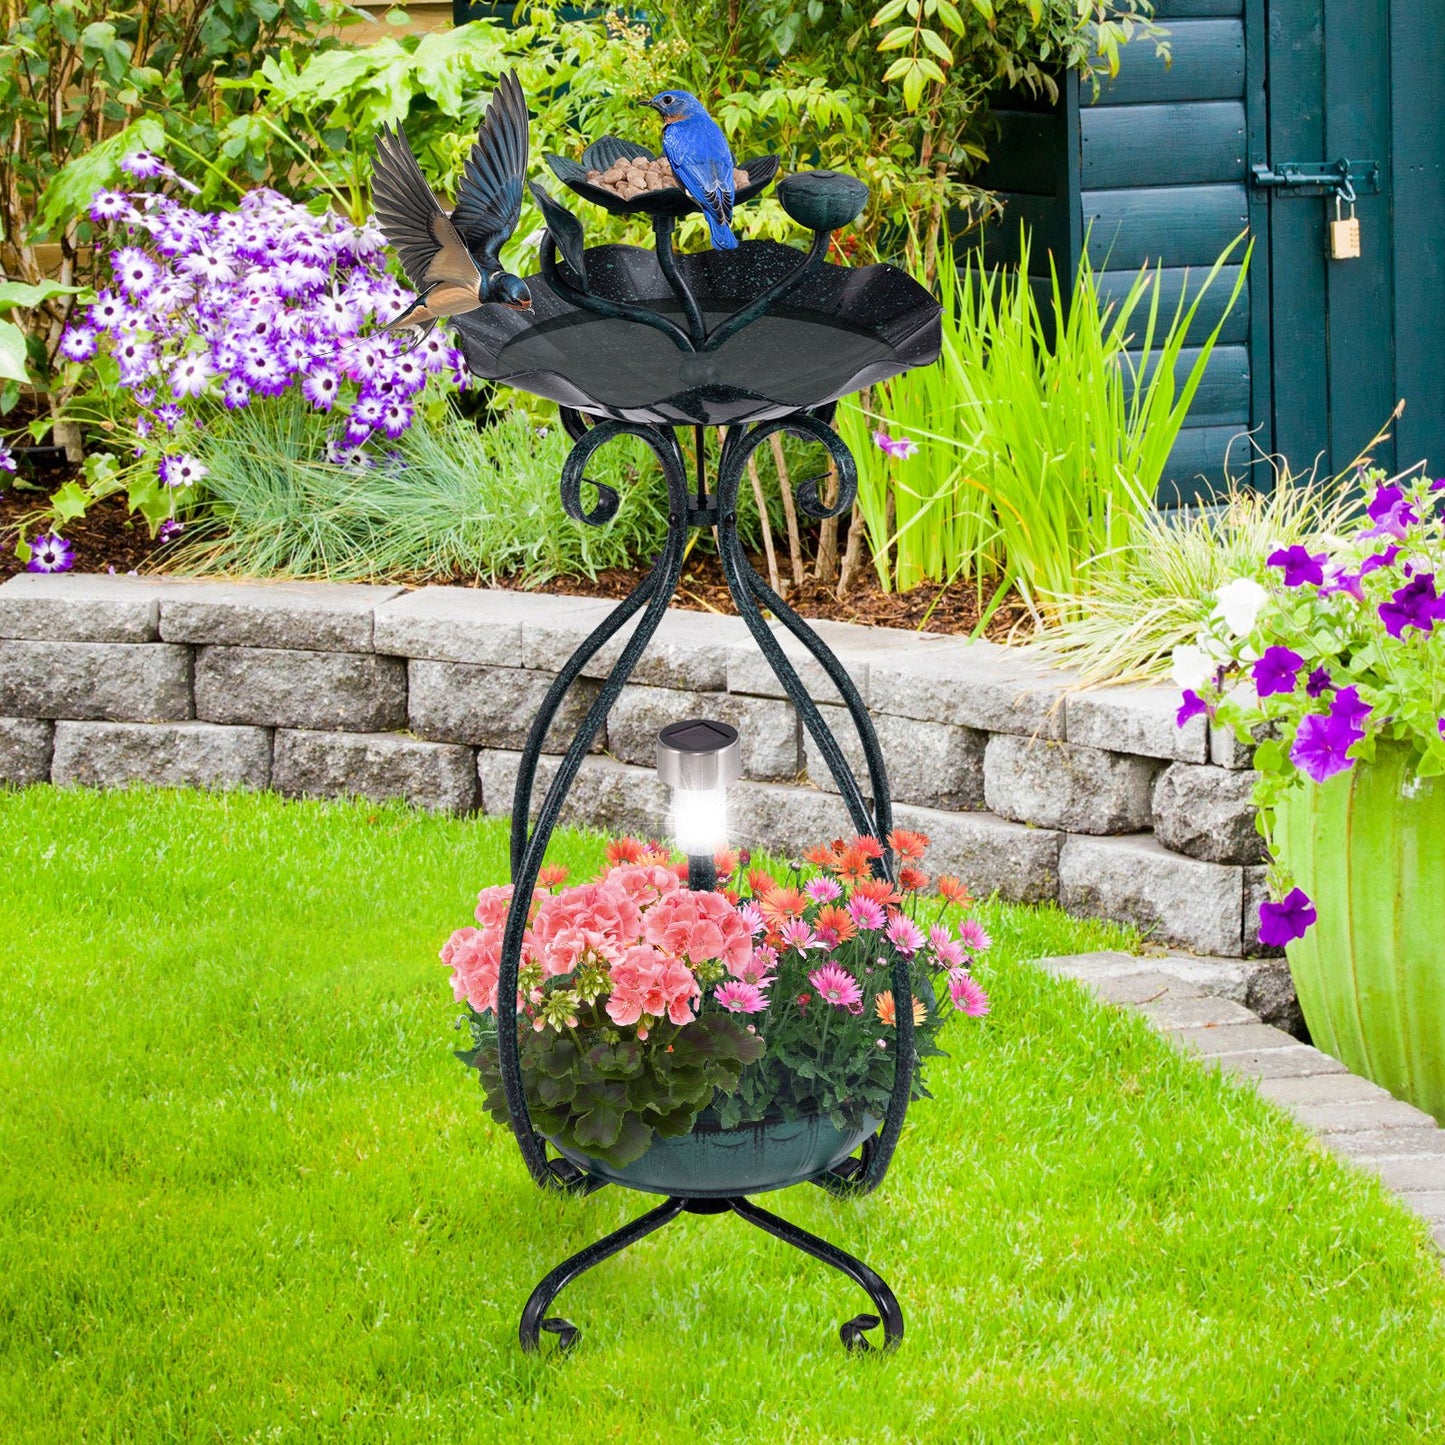 Solar Outdoor Bird Bath Feeder Combo with Flower Planter Pedestal and Solar Lights, Bronze - Gallery Canada